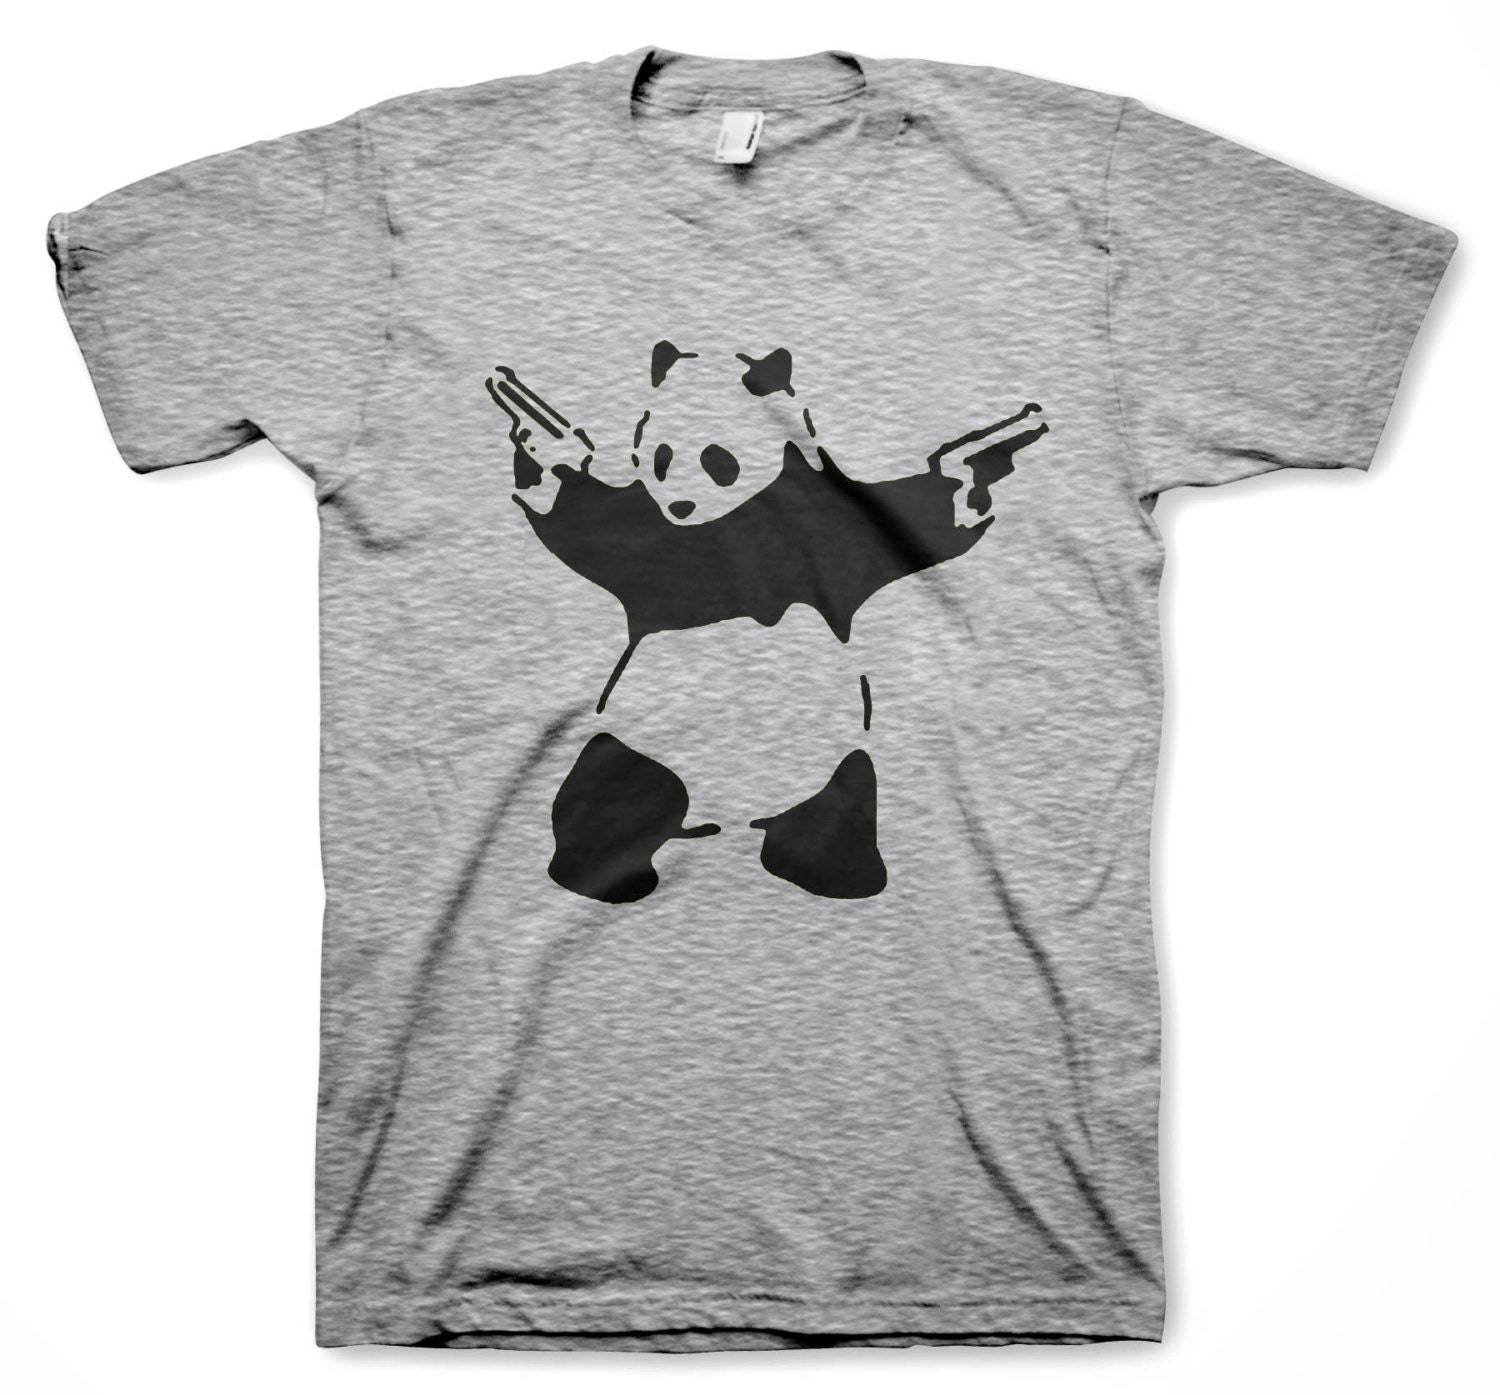 Panda with Guns T-shirt Banksy panda graffiti funny shirts